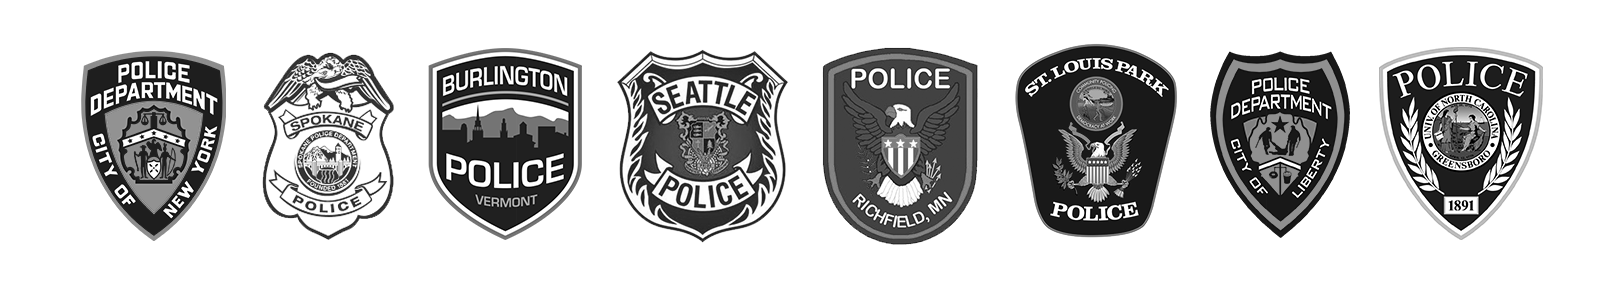 police-logos